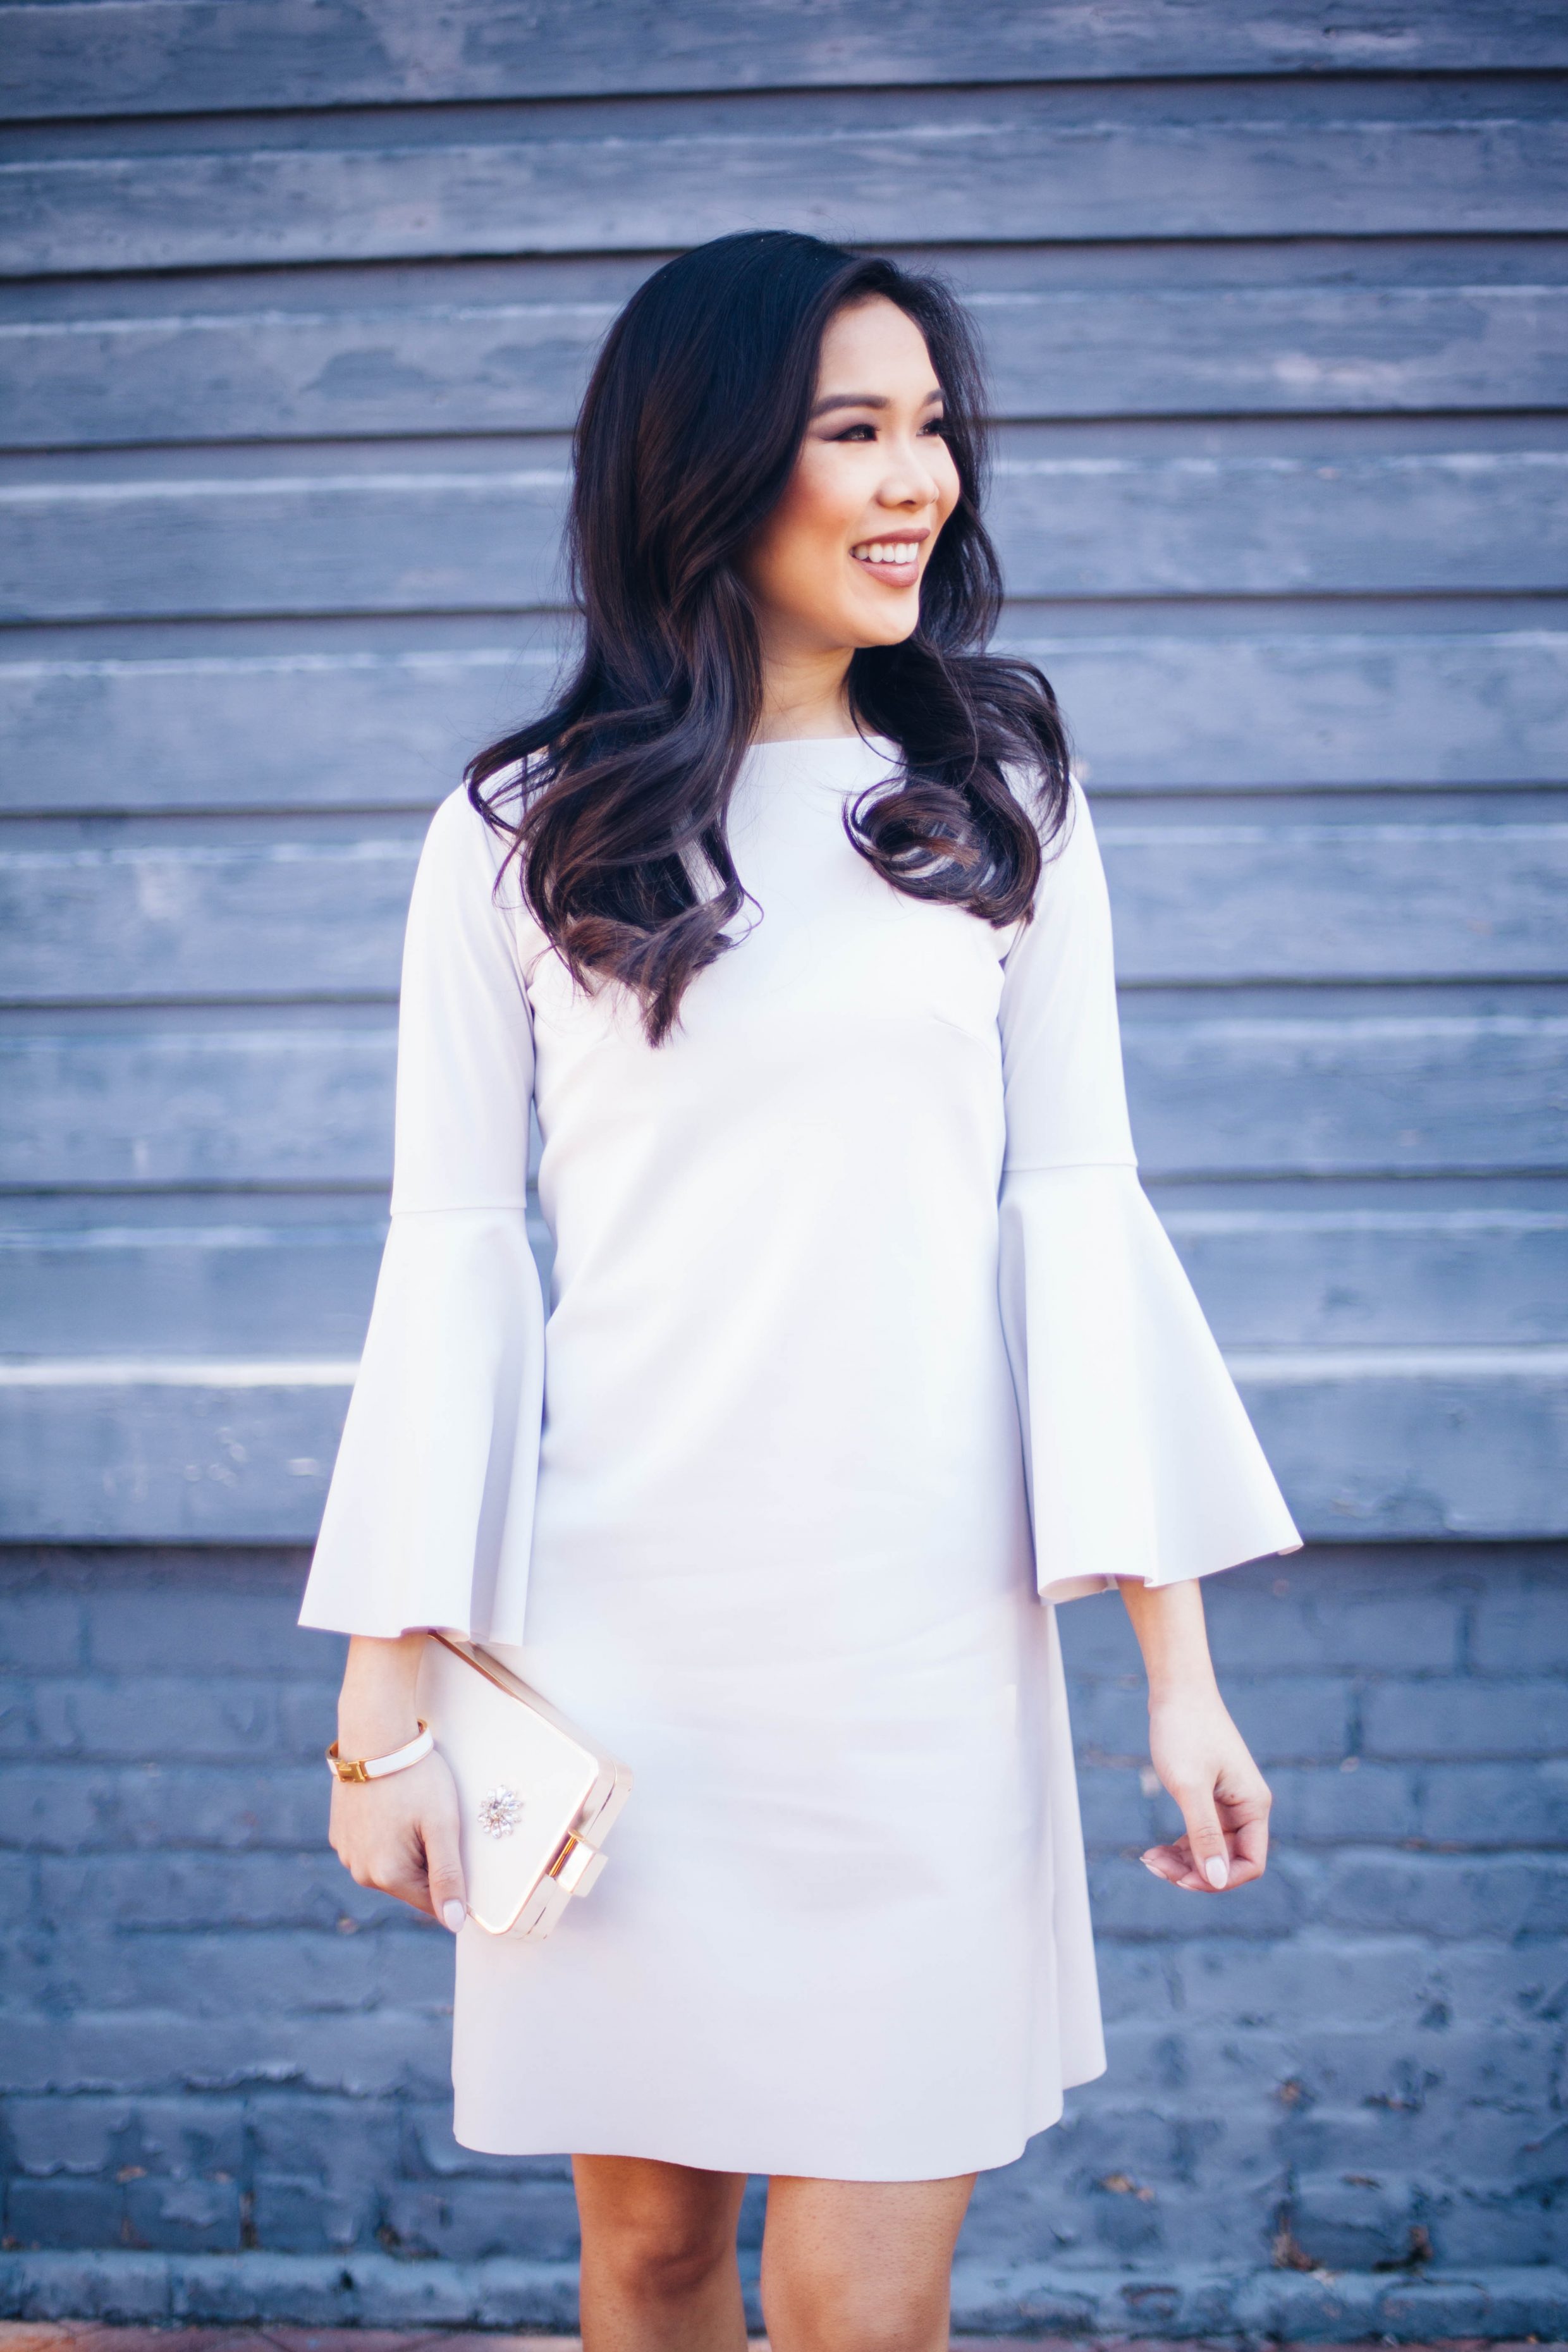 Blogger Hoang-Kim wears a La Petite Robe di Chiari Boni bell sleeve dress